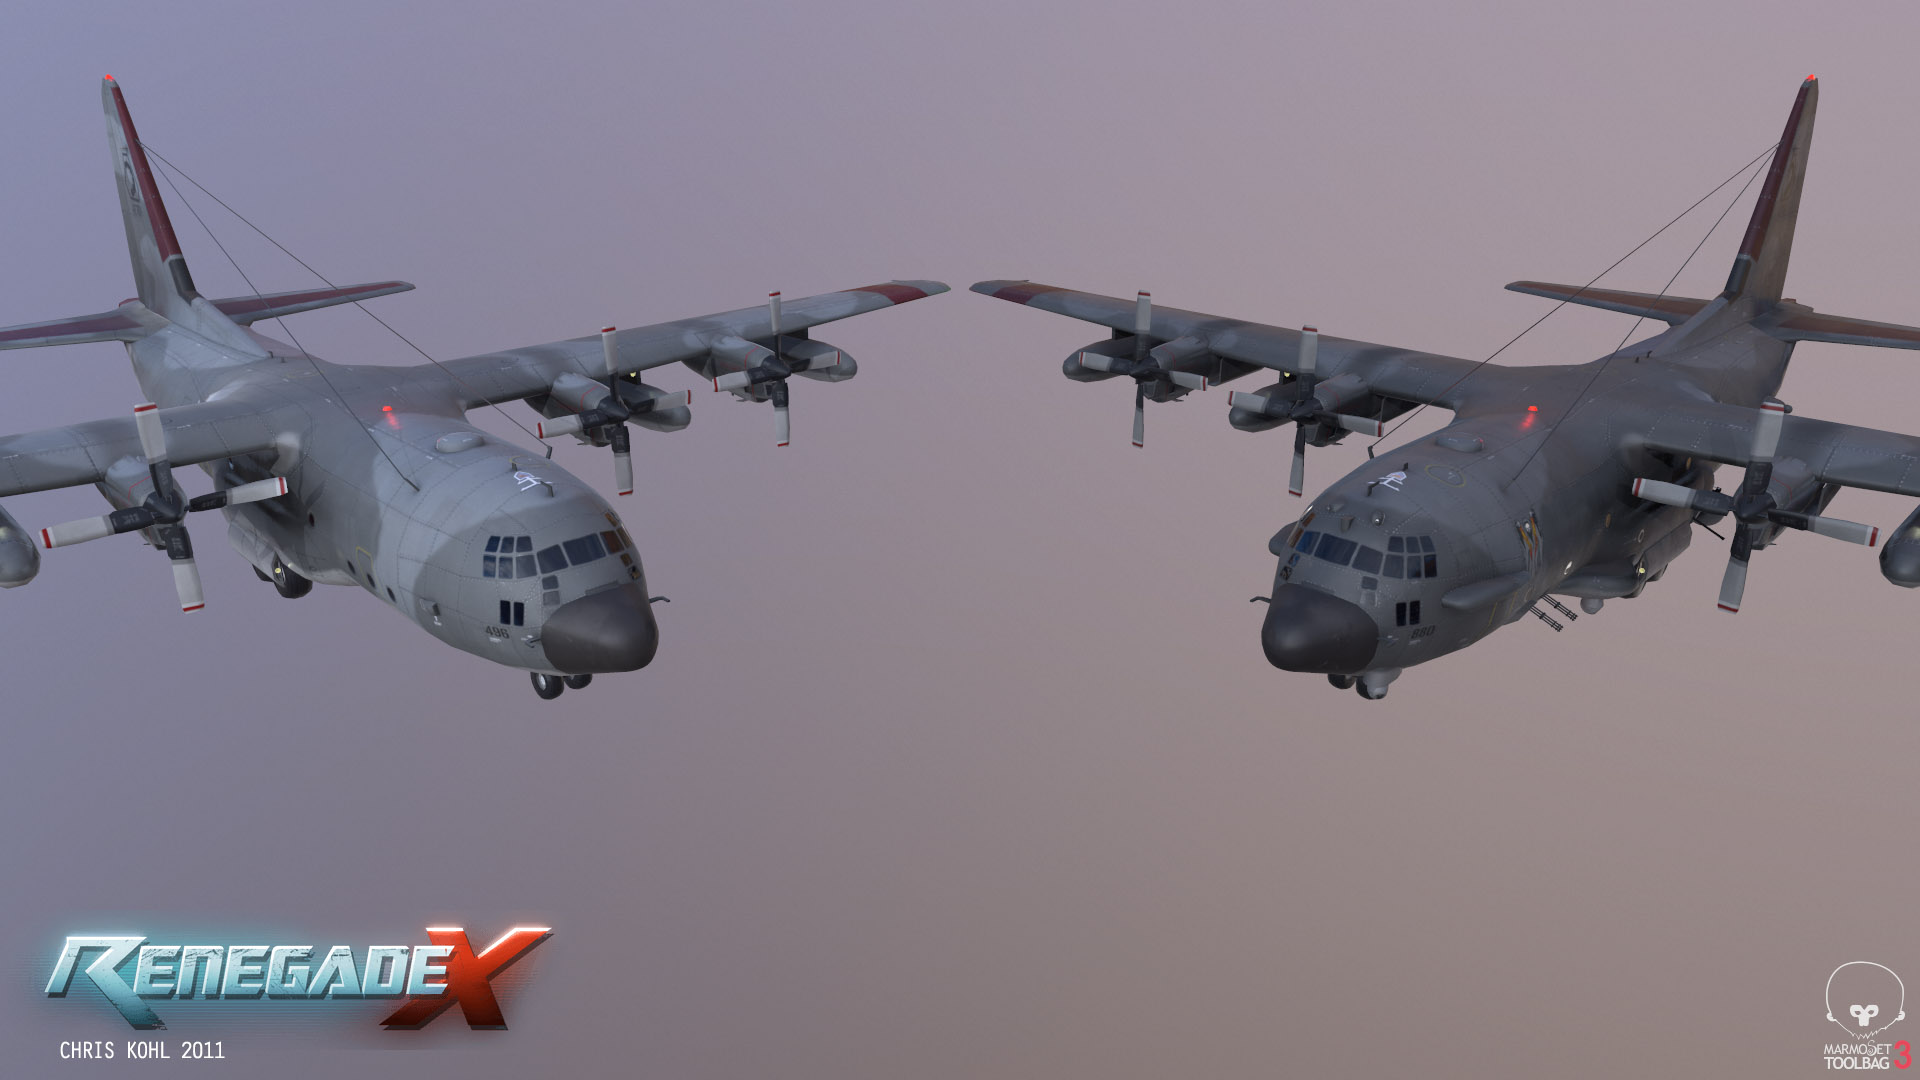 C-130 Hercules and AC-130 Spectre